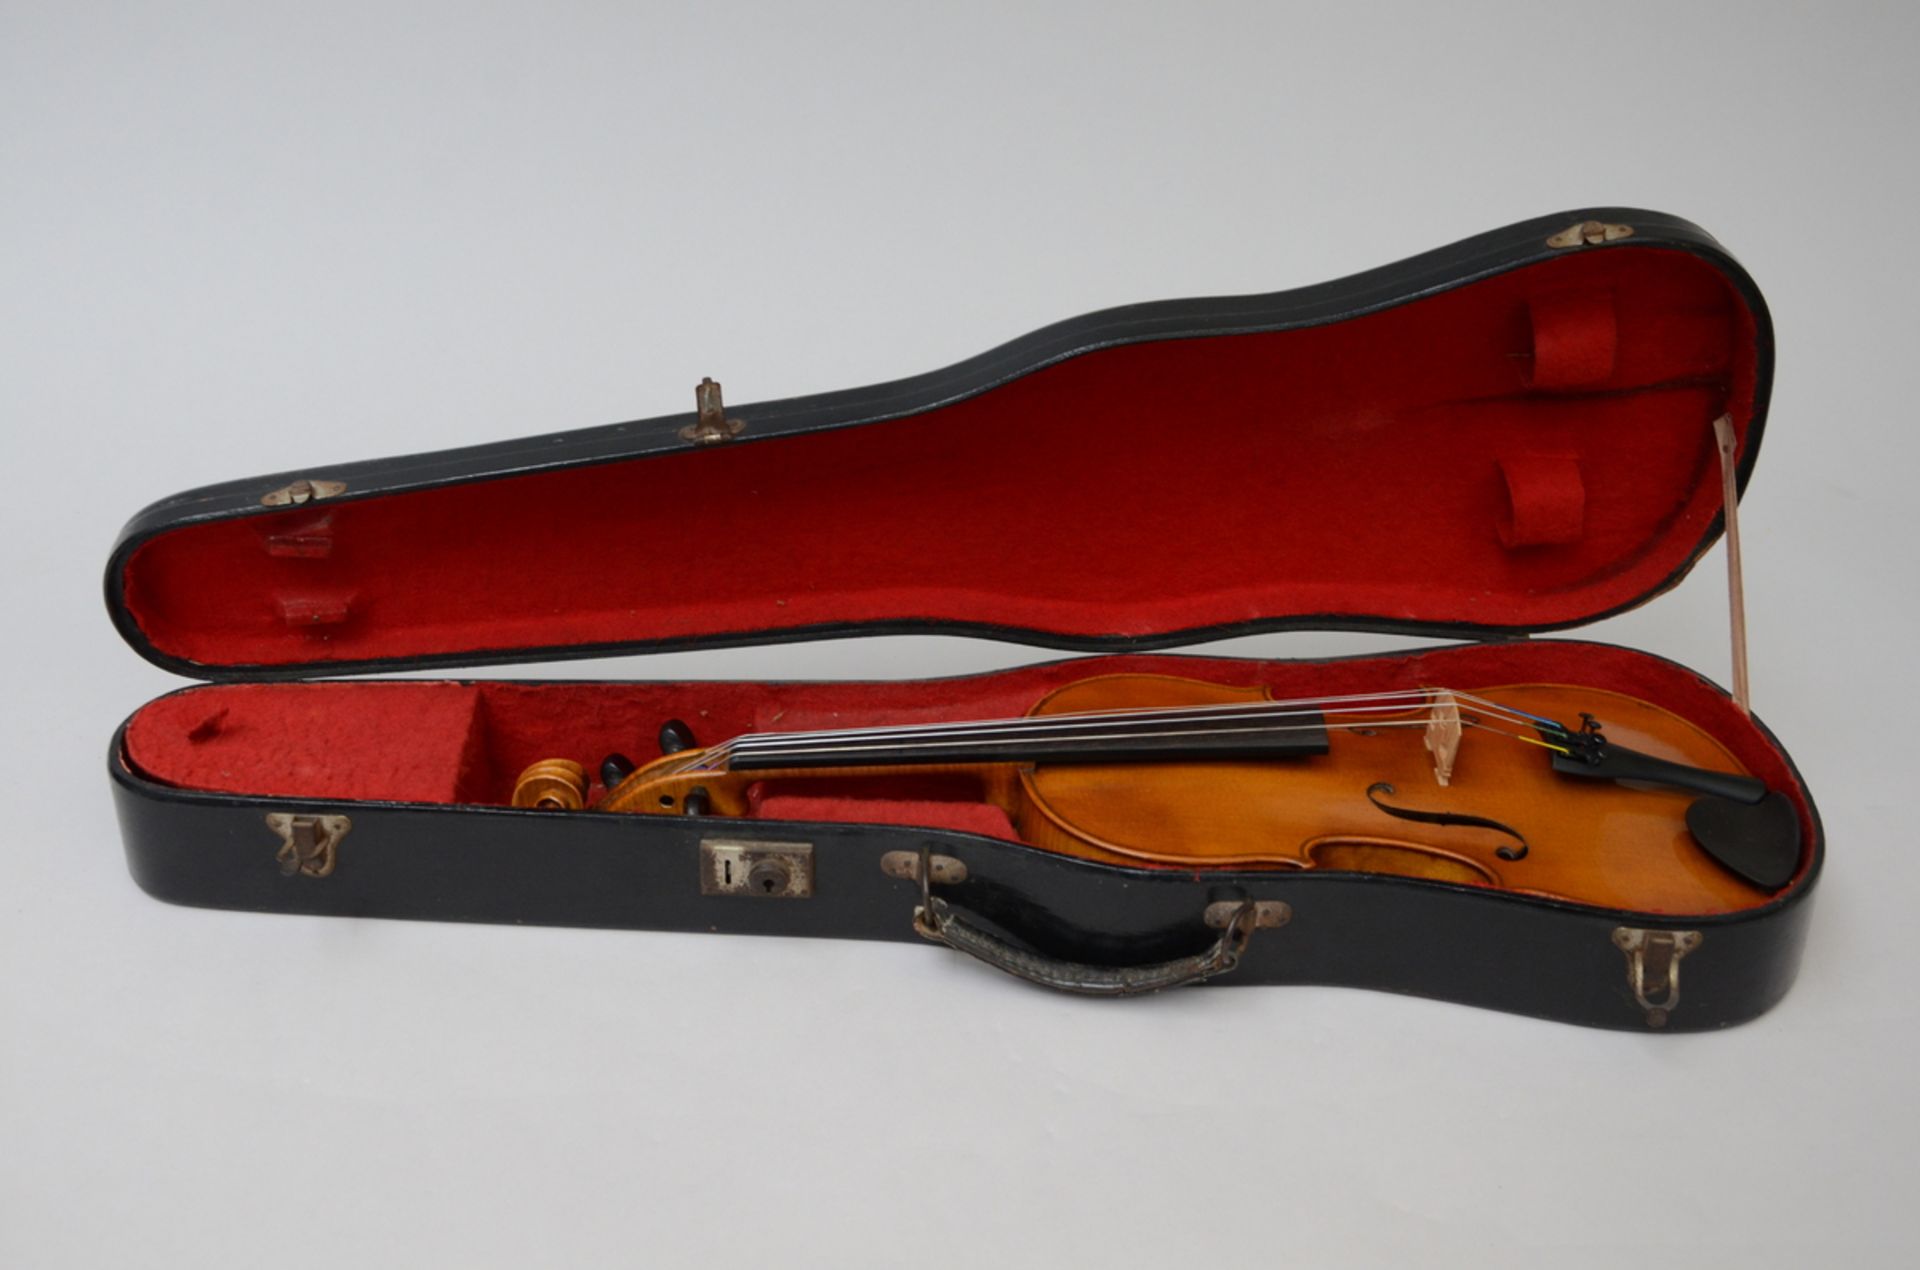 Violin in case 'Michel Gerard' Paris 1928 (length 35cm)